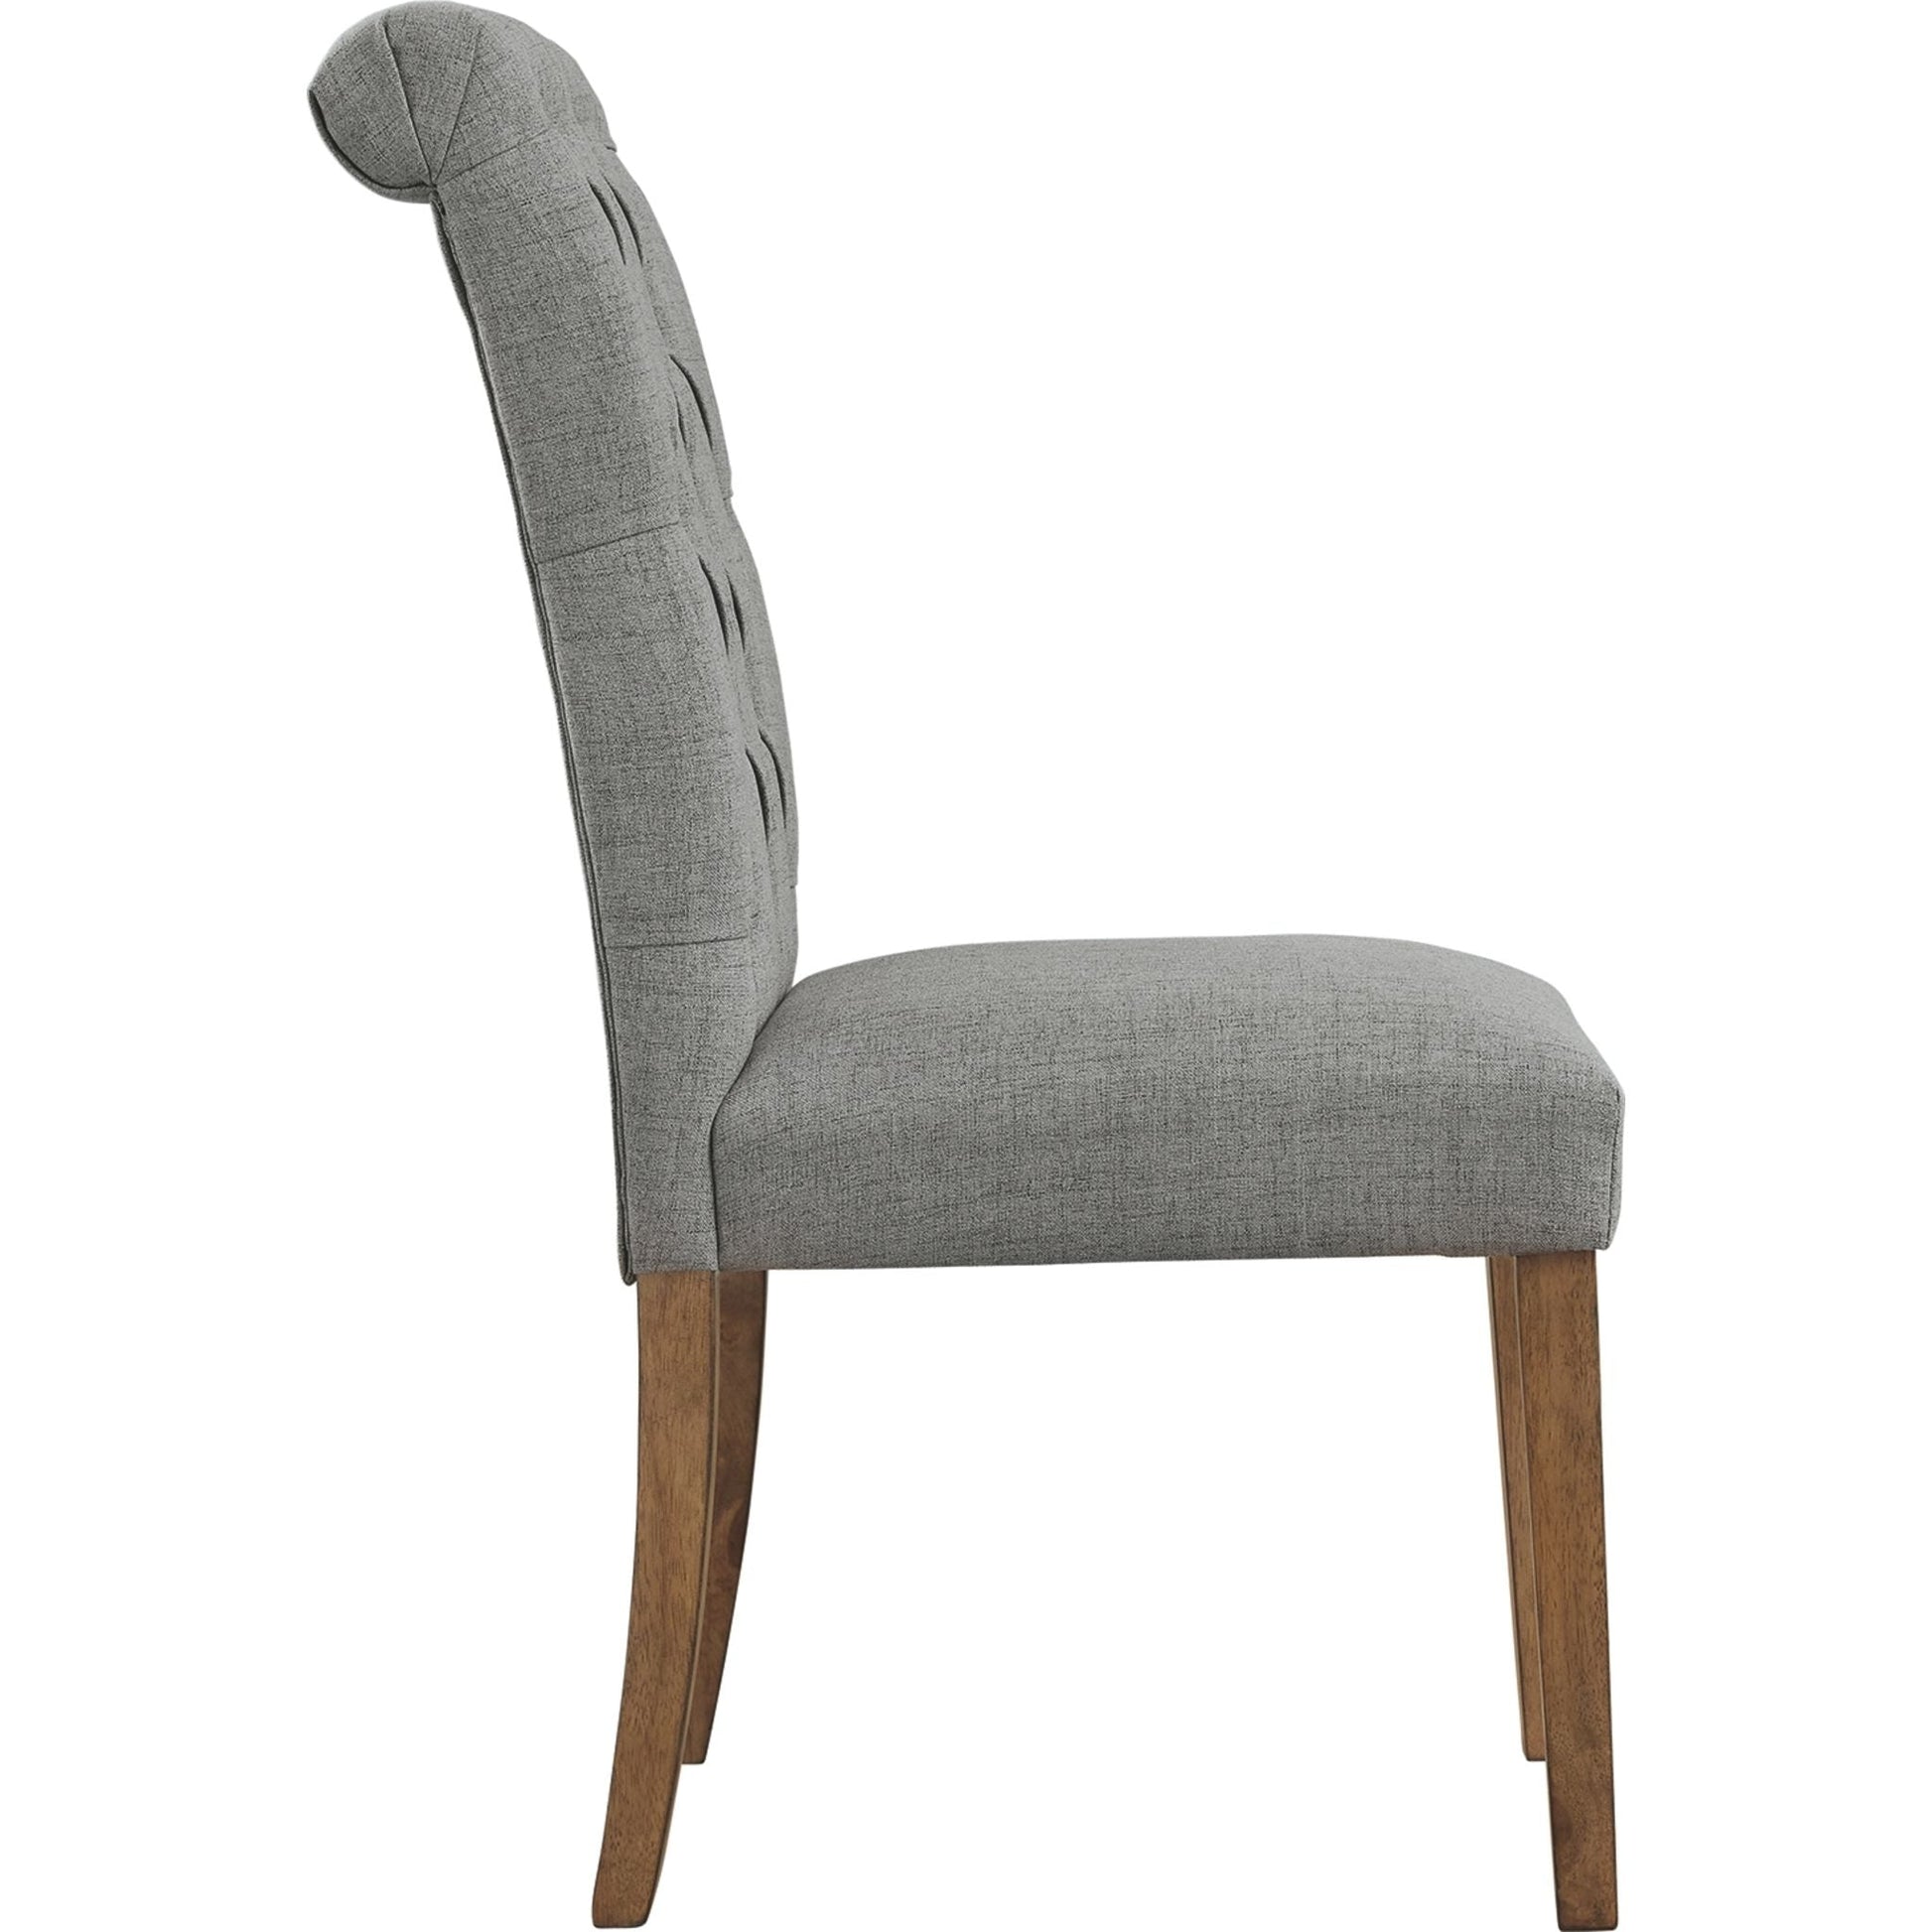 Harvina Upholstered Side Chair - Gray - (D324-01)